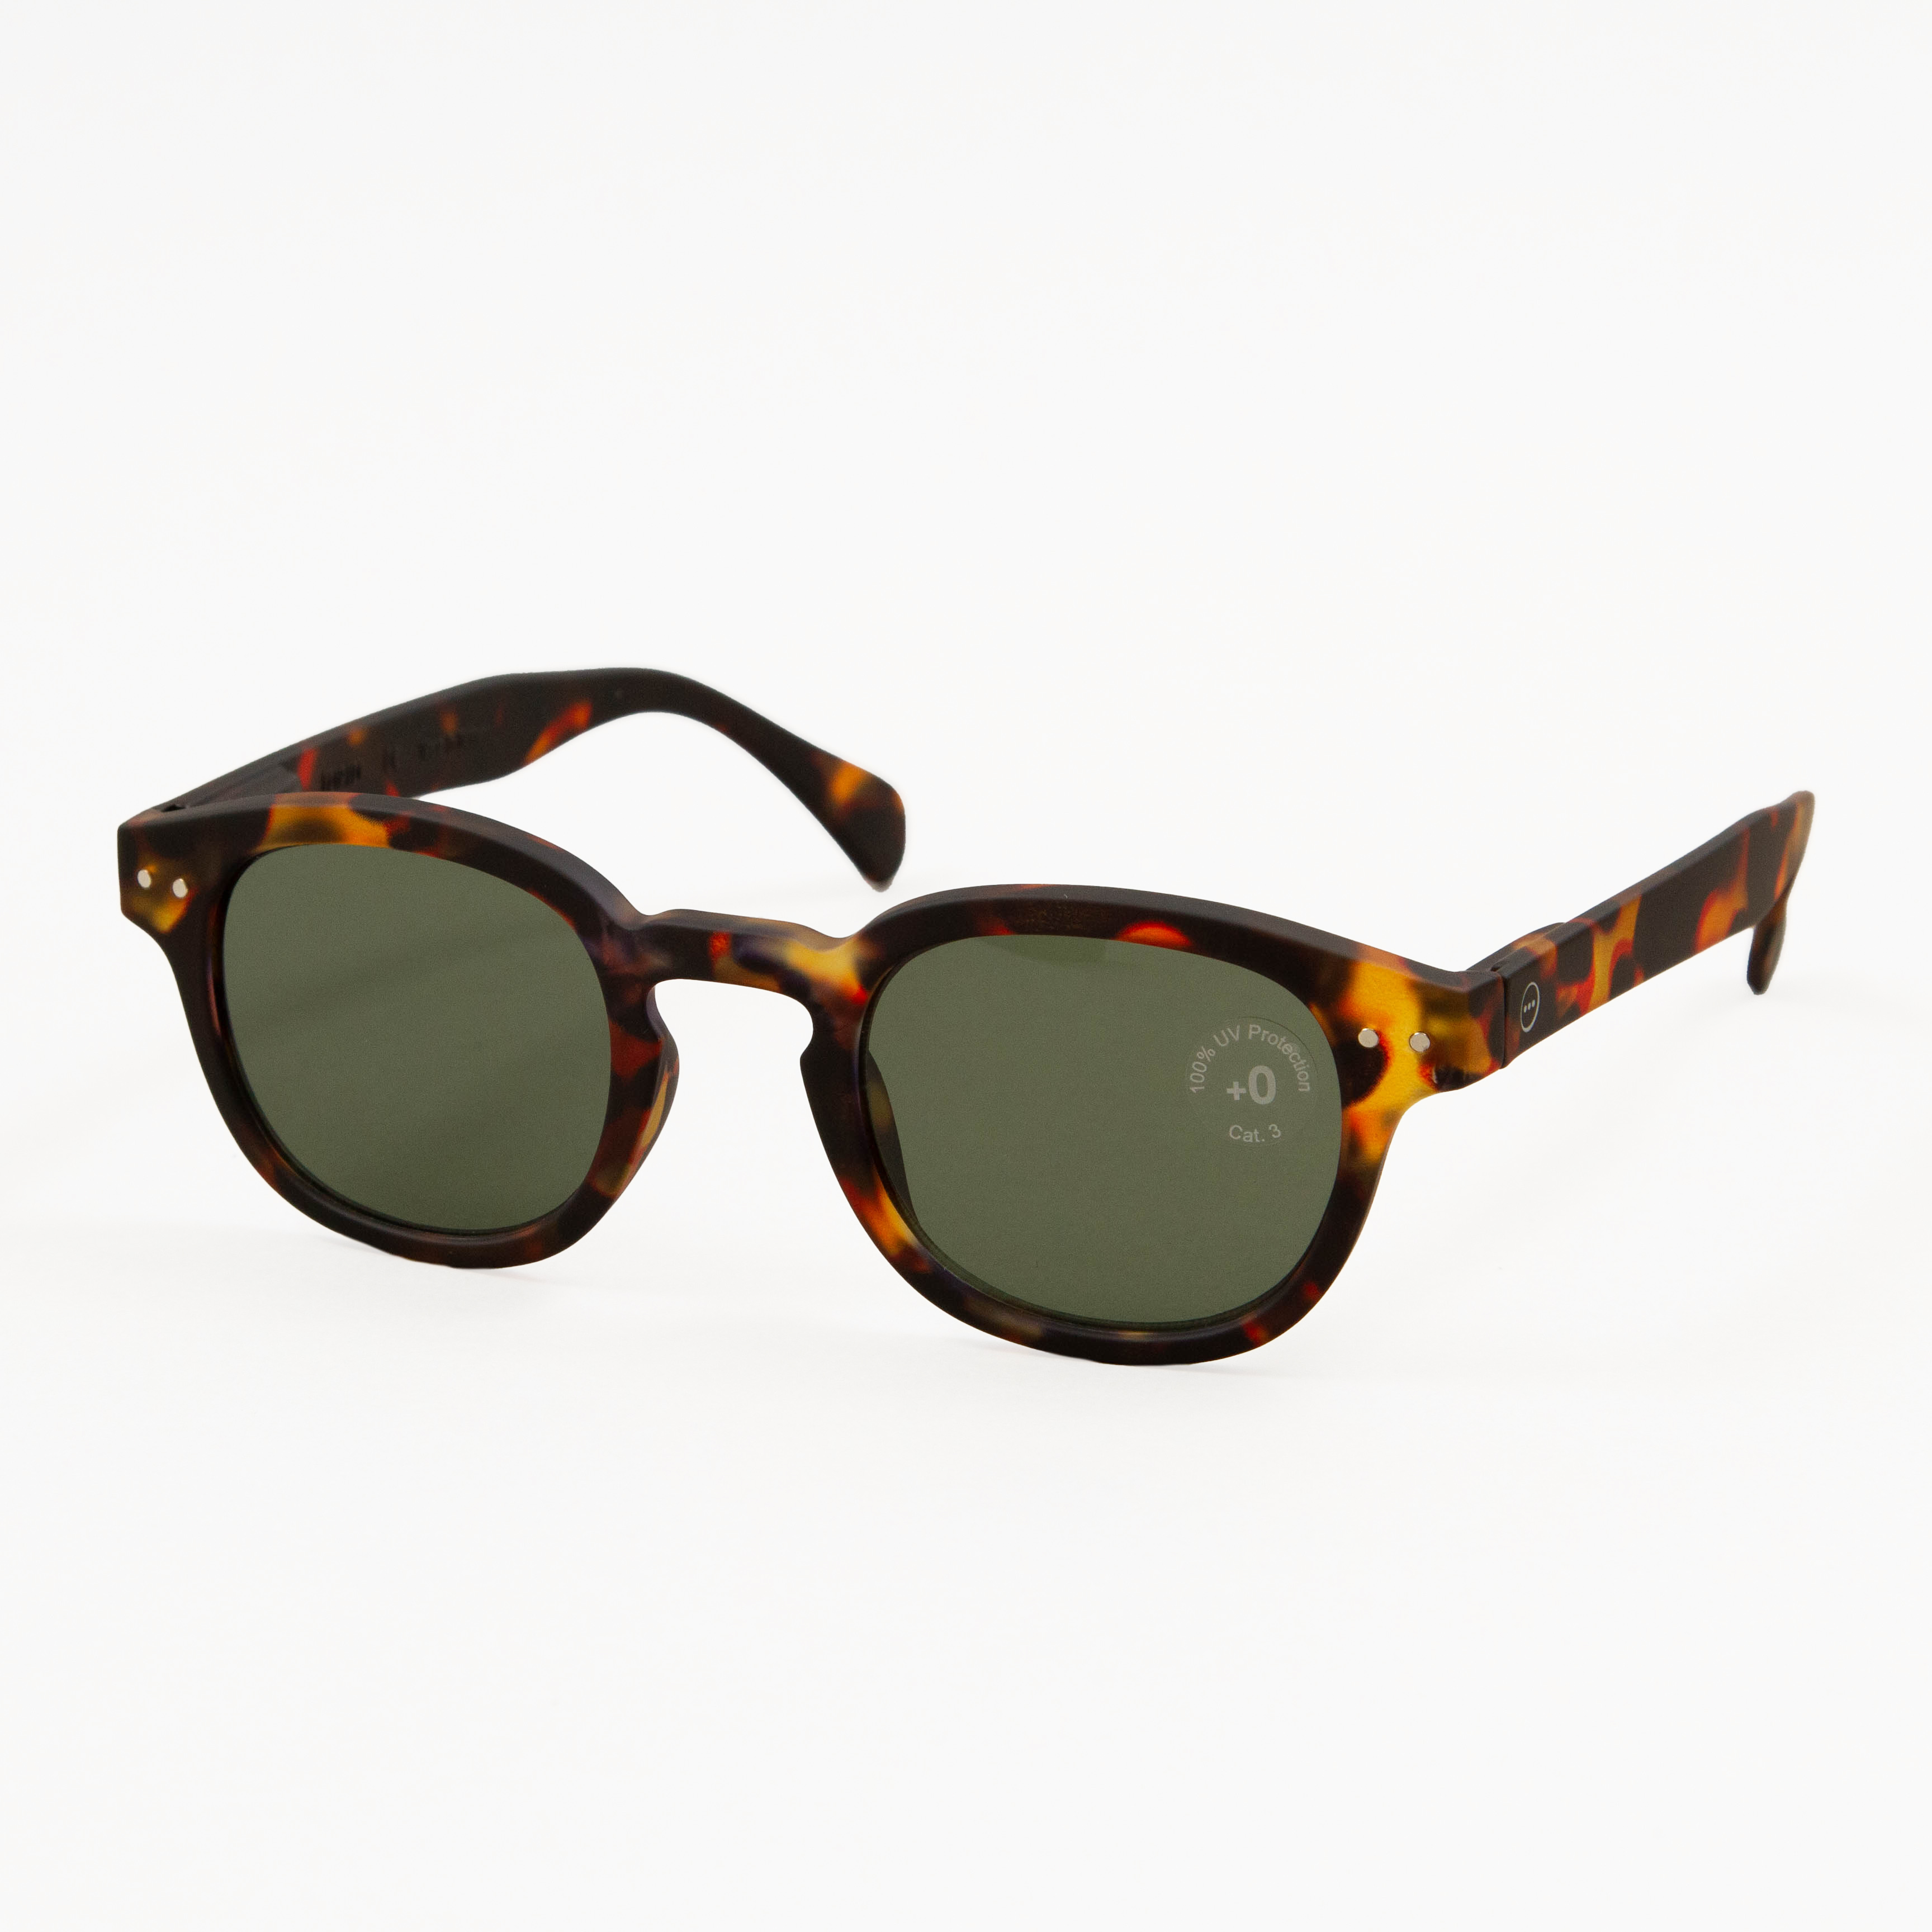 izipizi-c-the-retro-square-style-sunglasses-with-green-lenses-in-tortoise-brown